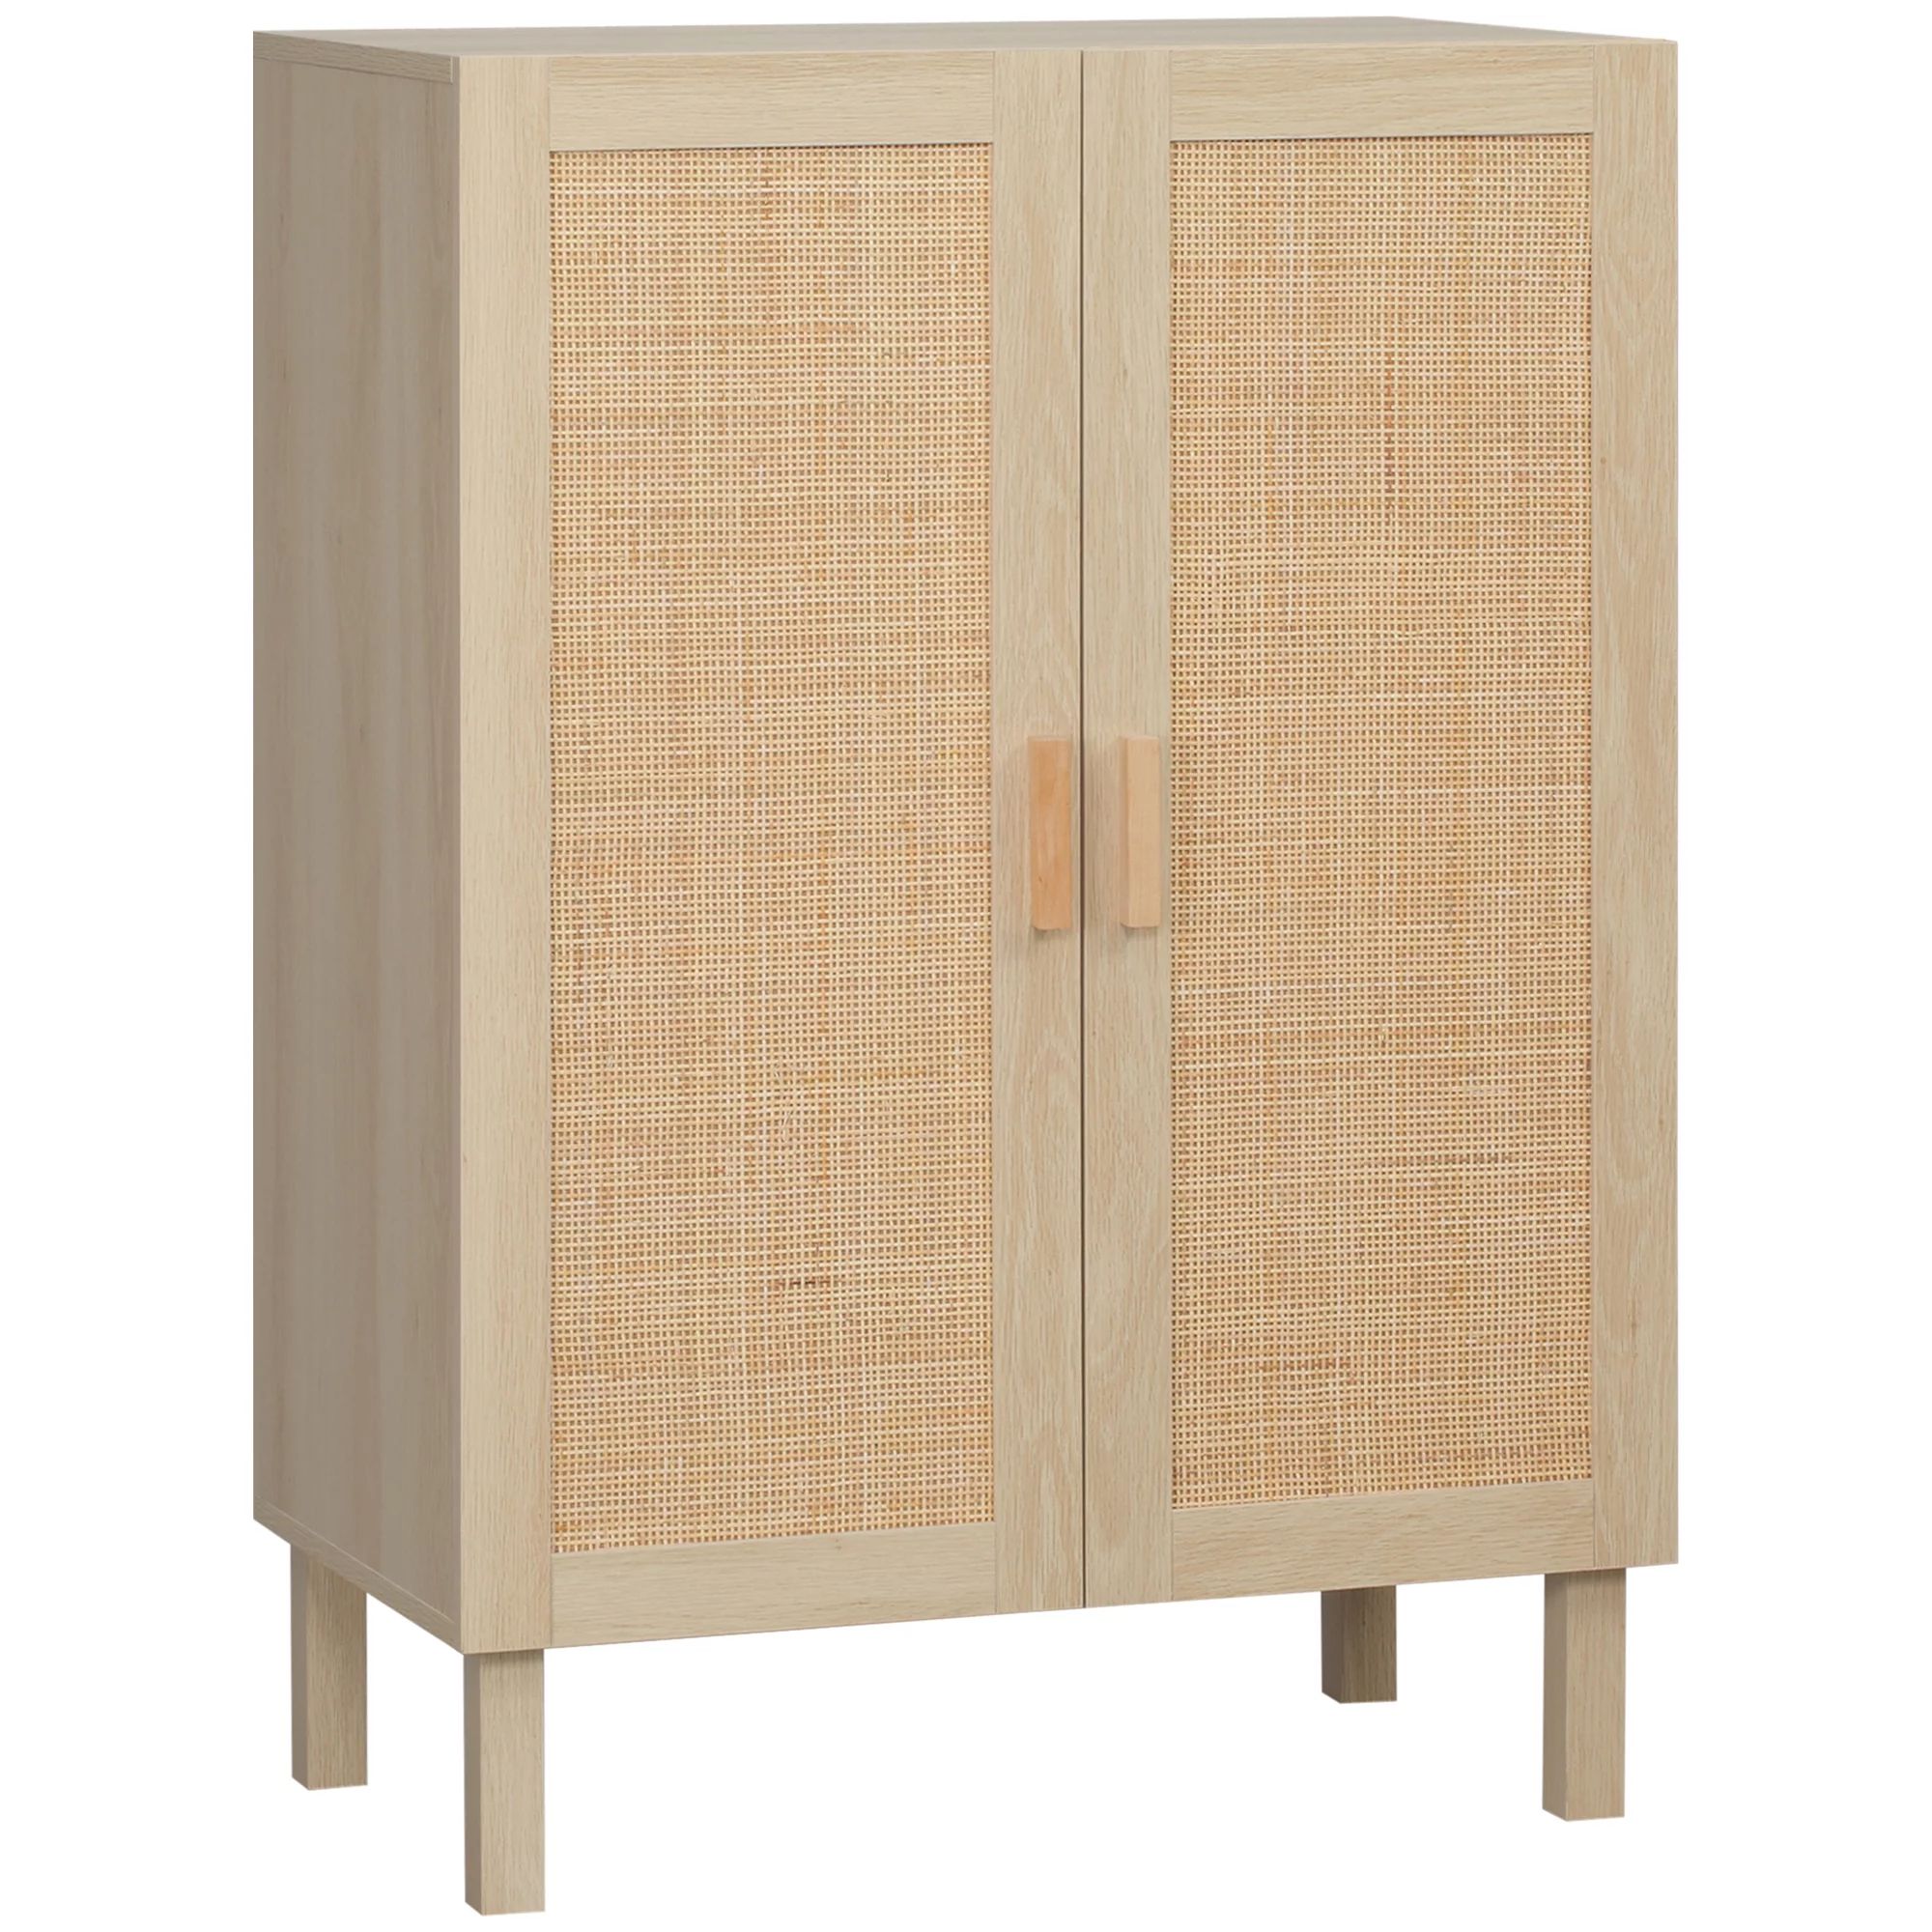 HOMCOM Kitchen Storage Cabinet with Rattan Doors and Adjustable Shelves | Walmart (US)